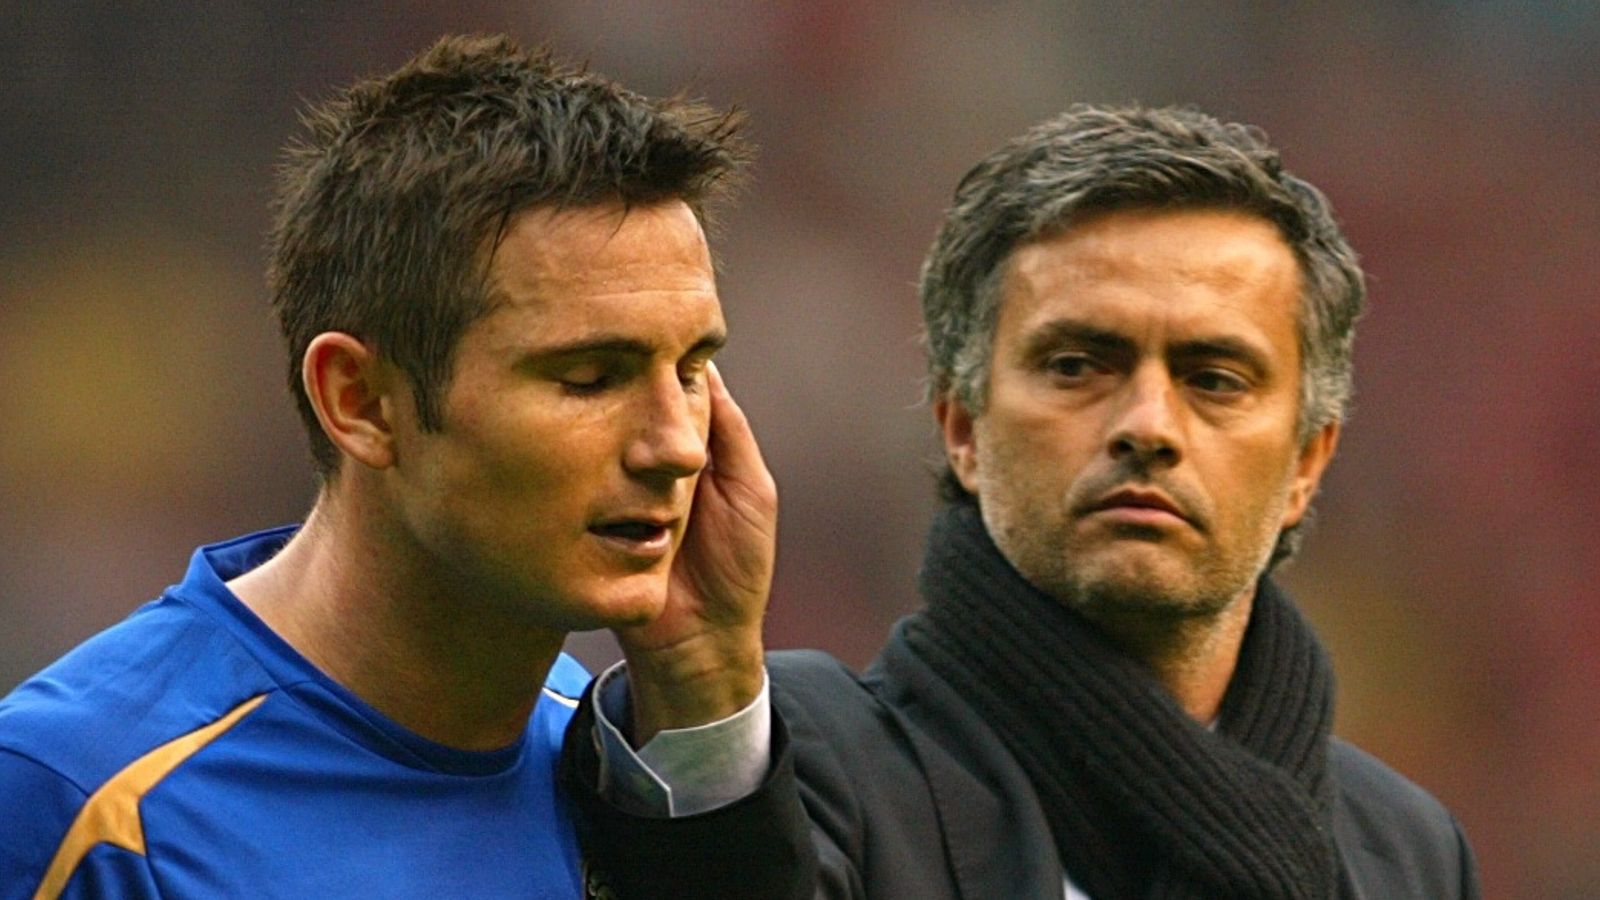 Jose Mourinho: Frank Lampard sacking Chelsea shows football brutality |  football news